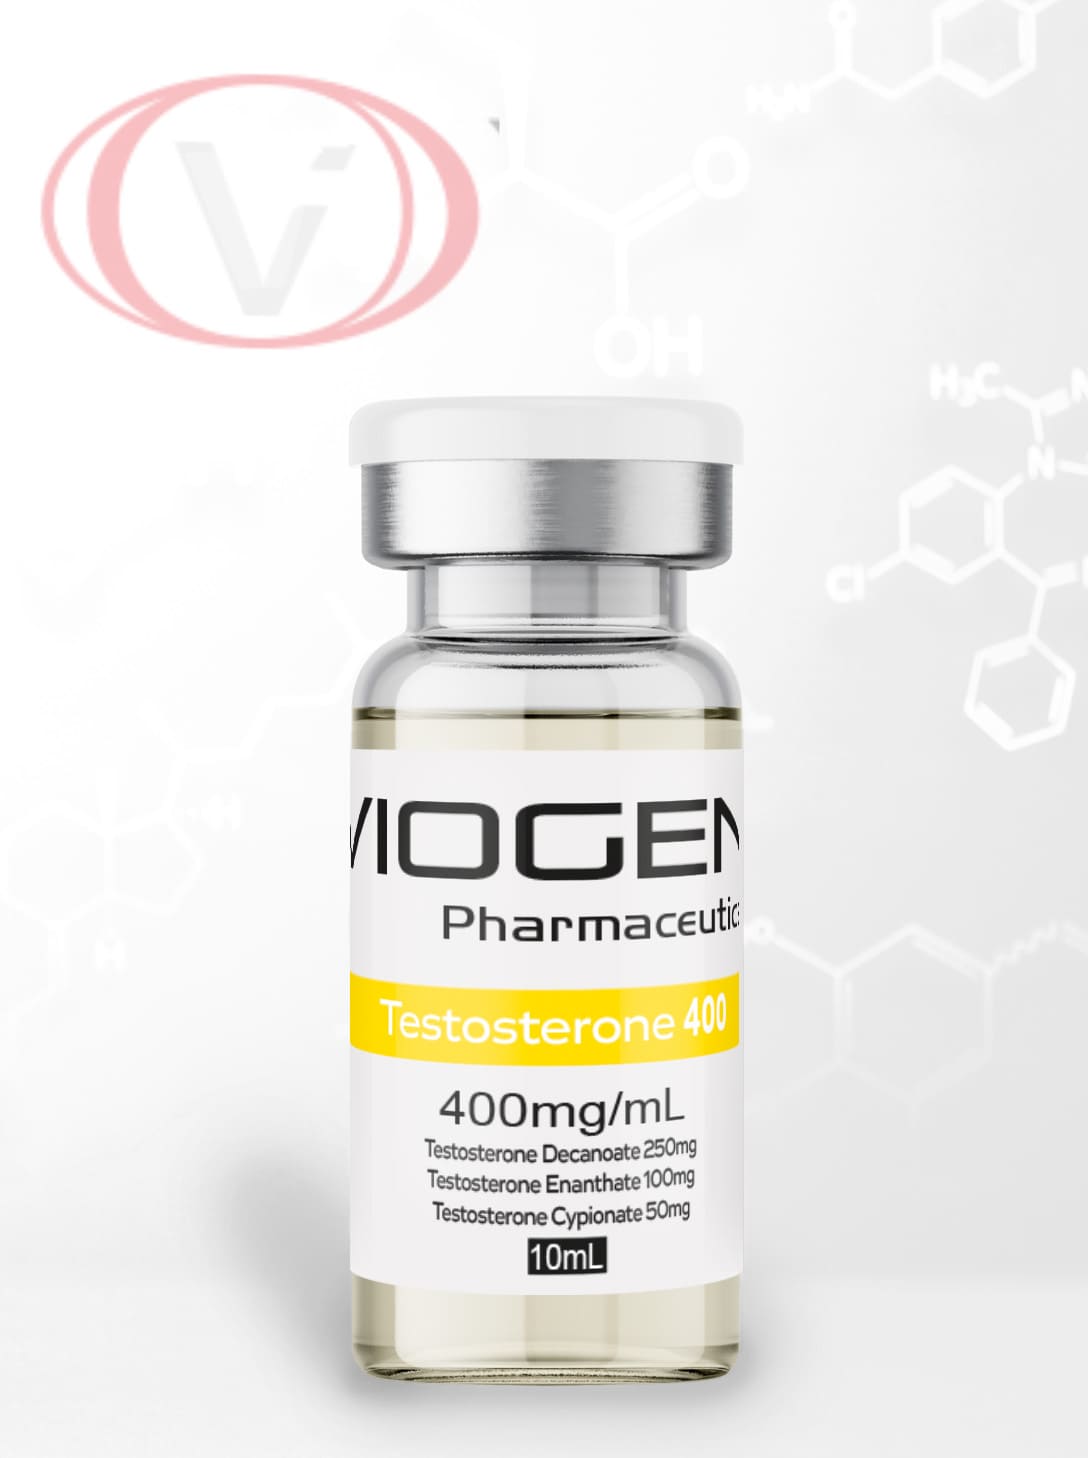 Testosterone Mix 400 Mg 10 Ml Viogen Pharma